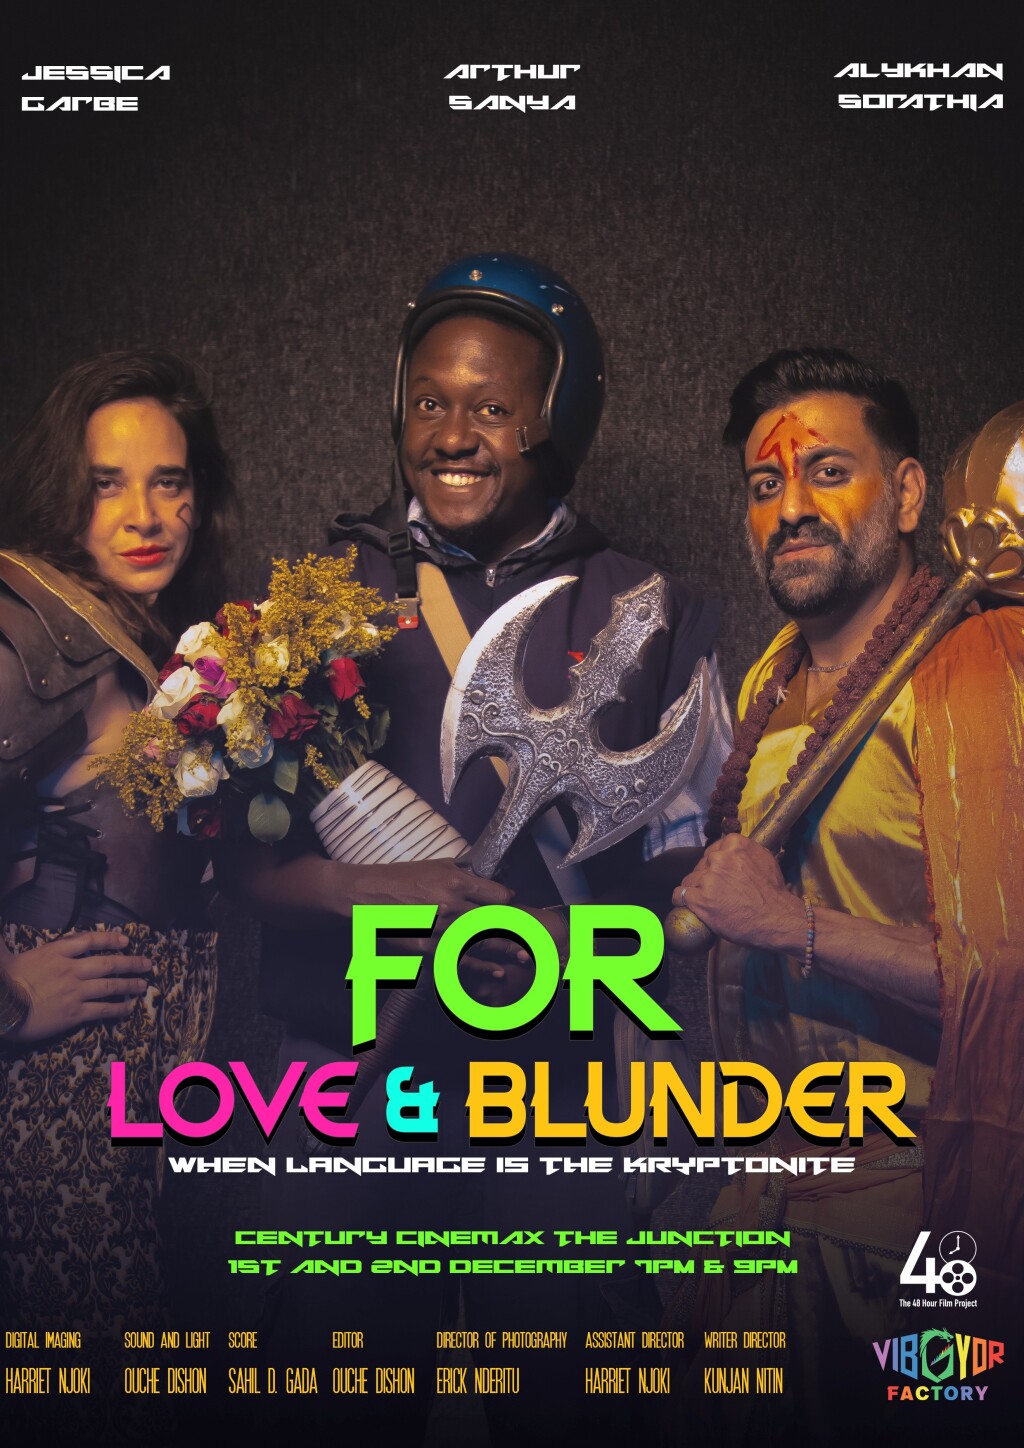 Filmposter for For Love & Blunder